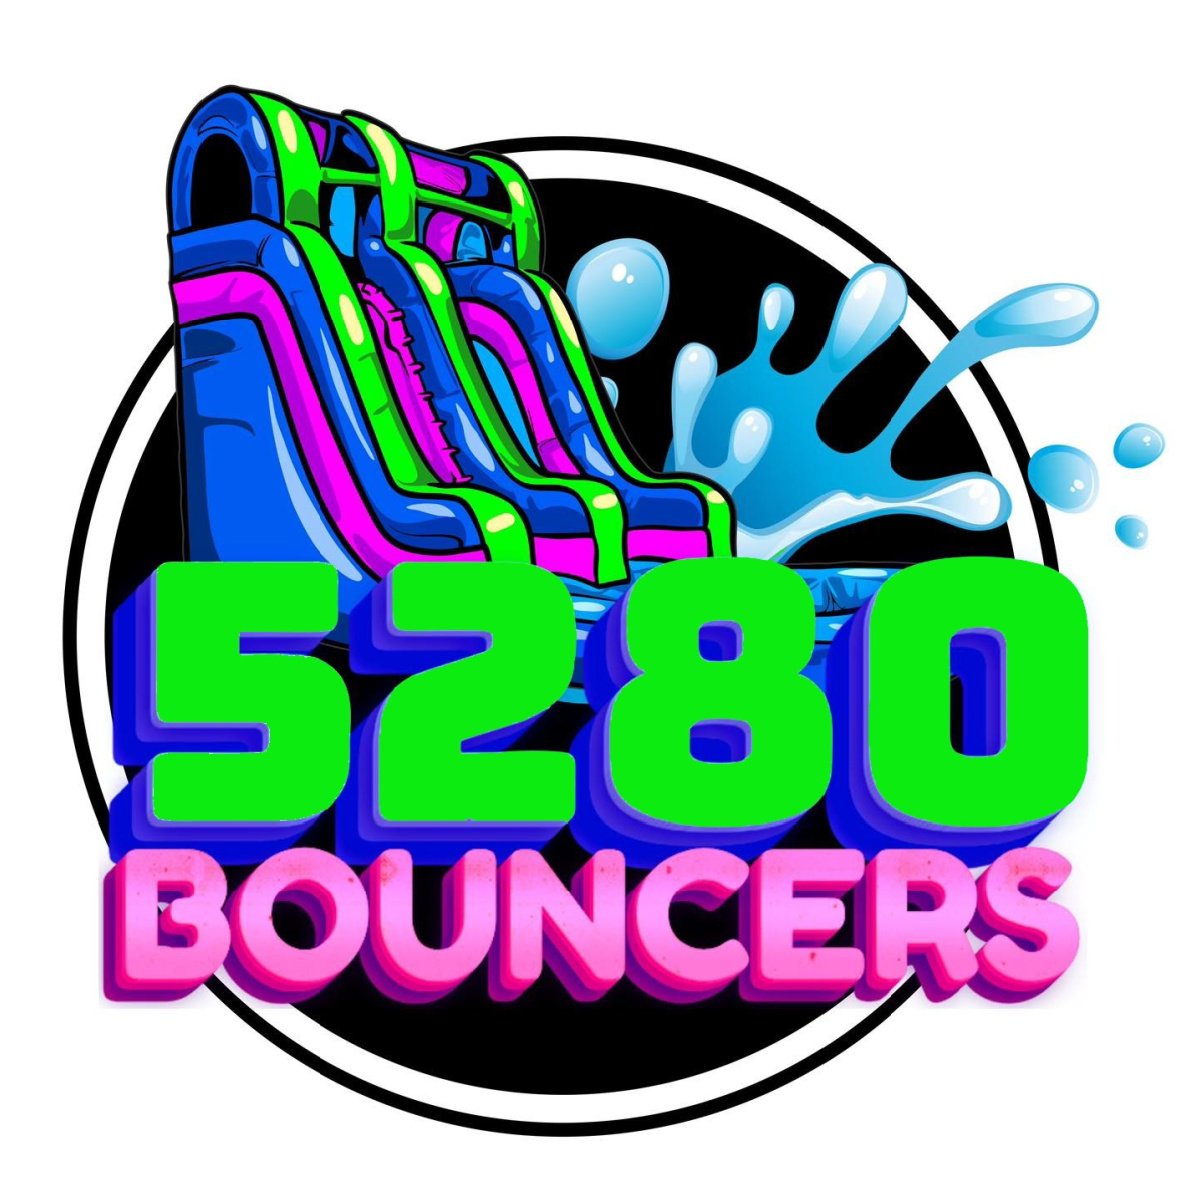 5280 Bouncers logo